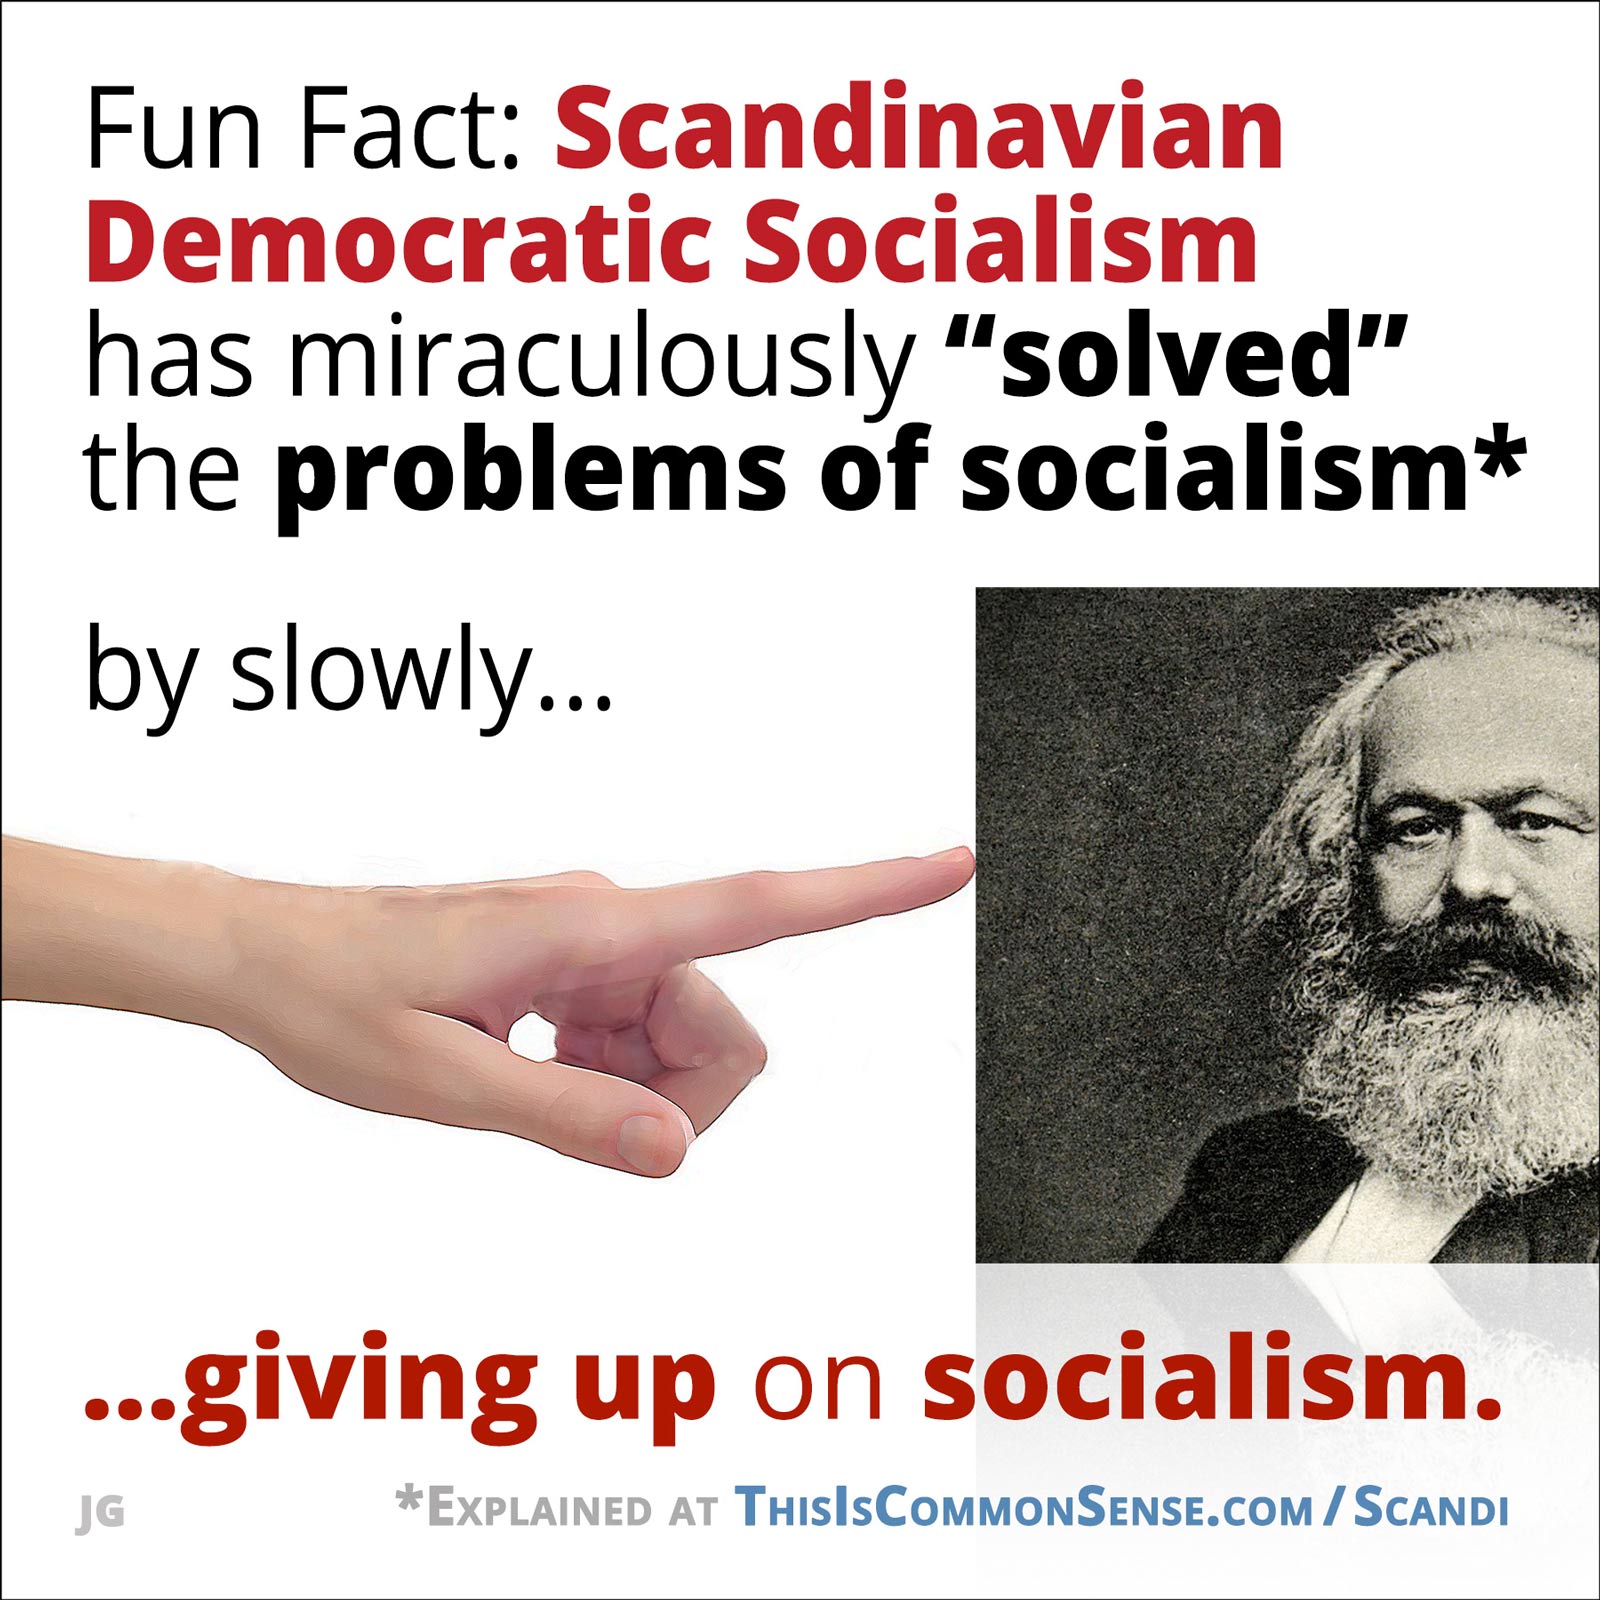 Is Denmark Socialist?